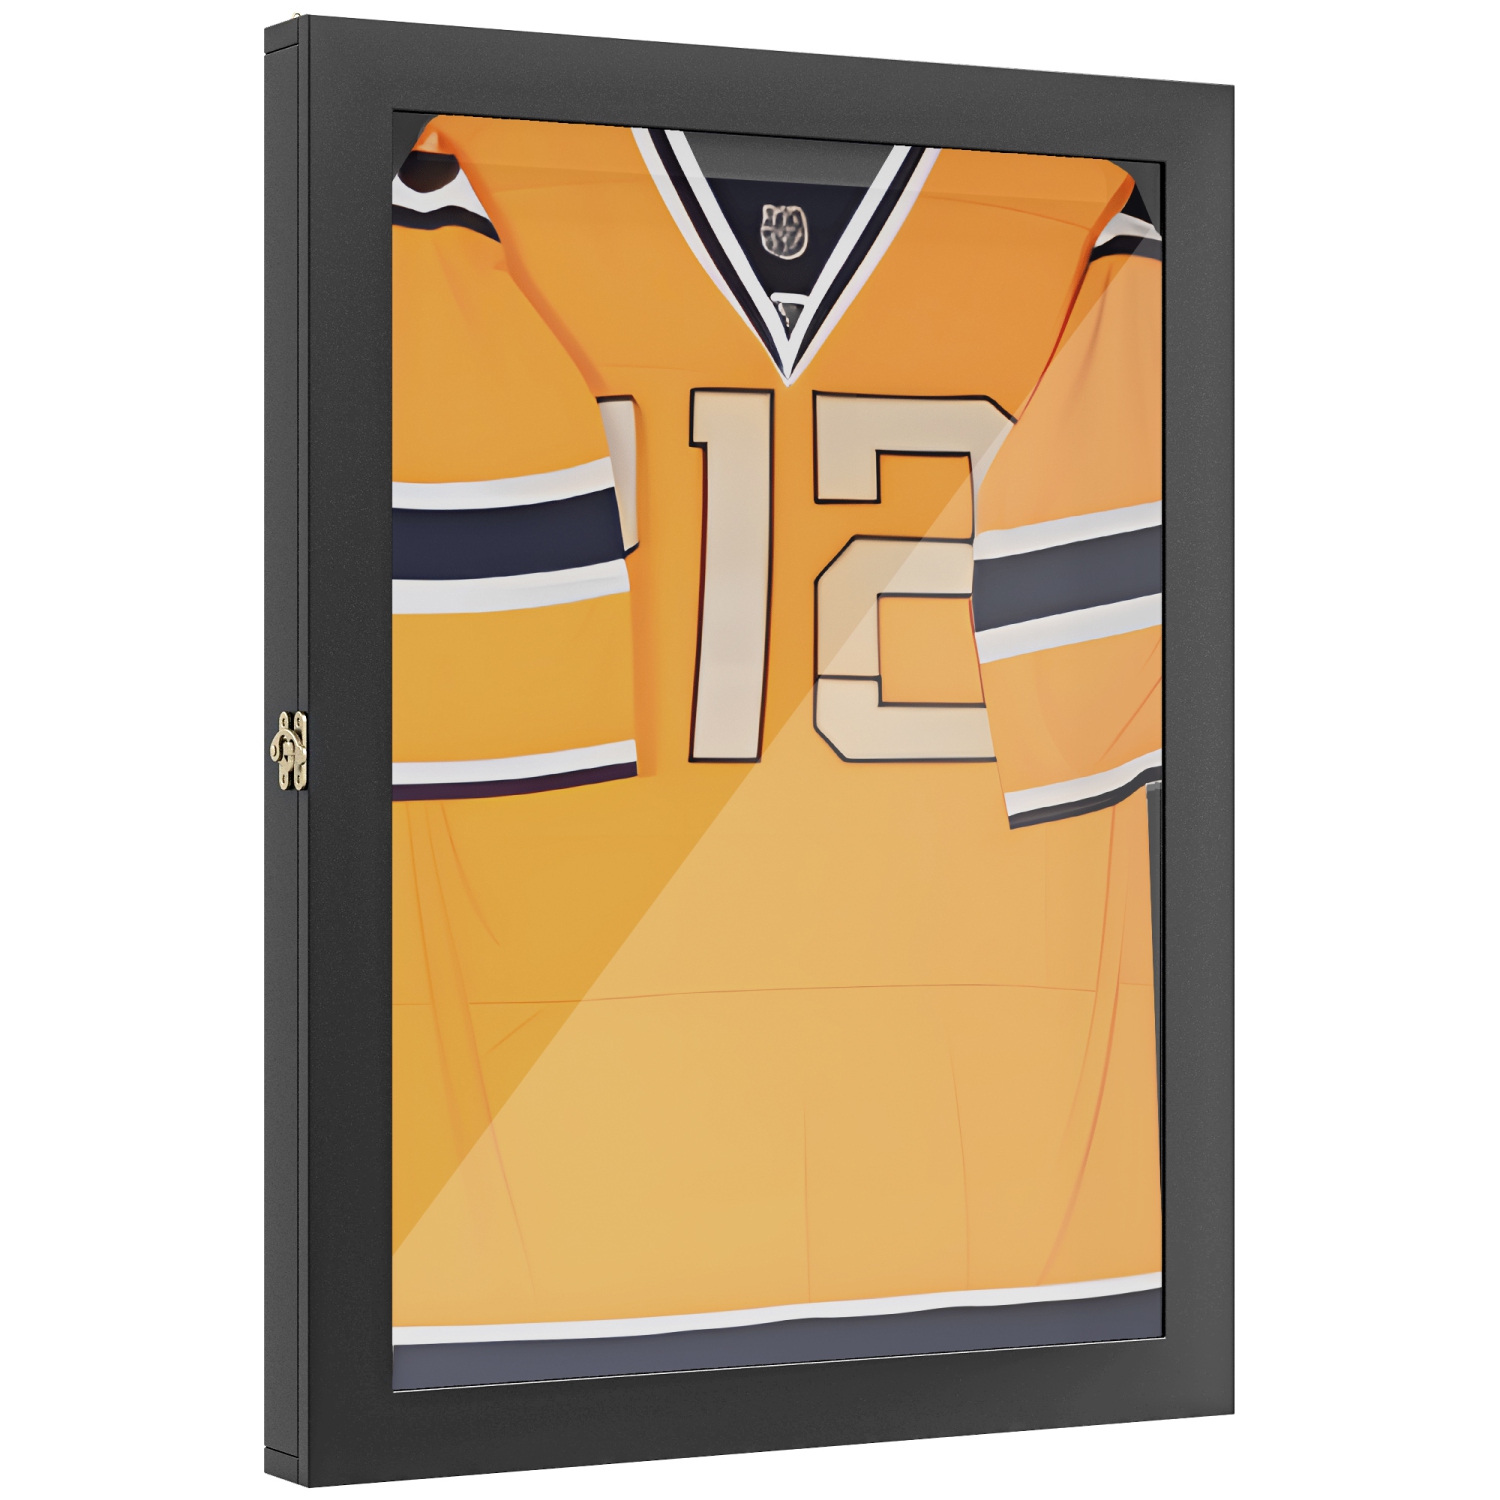 HOMCOM Jersey Display Frame Case, Acrylic Sports Shirt Shadow Box for Basketball Football Baseball, 28" x 35", Black